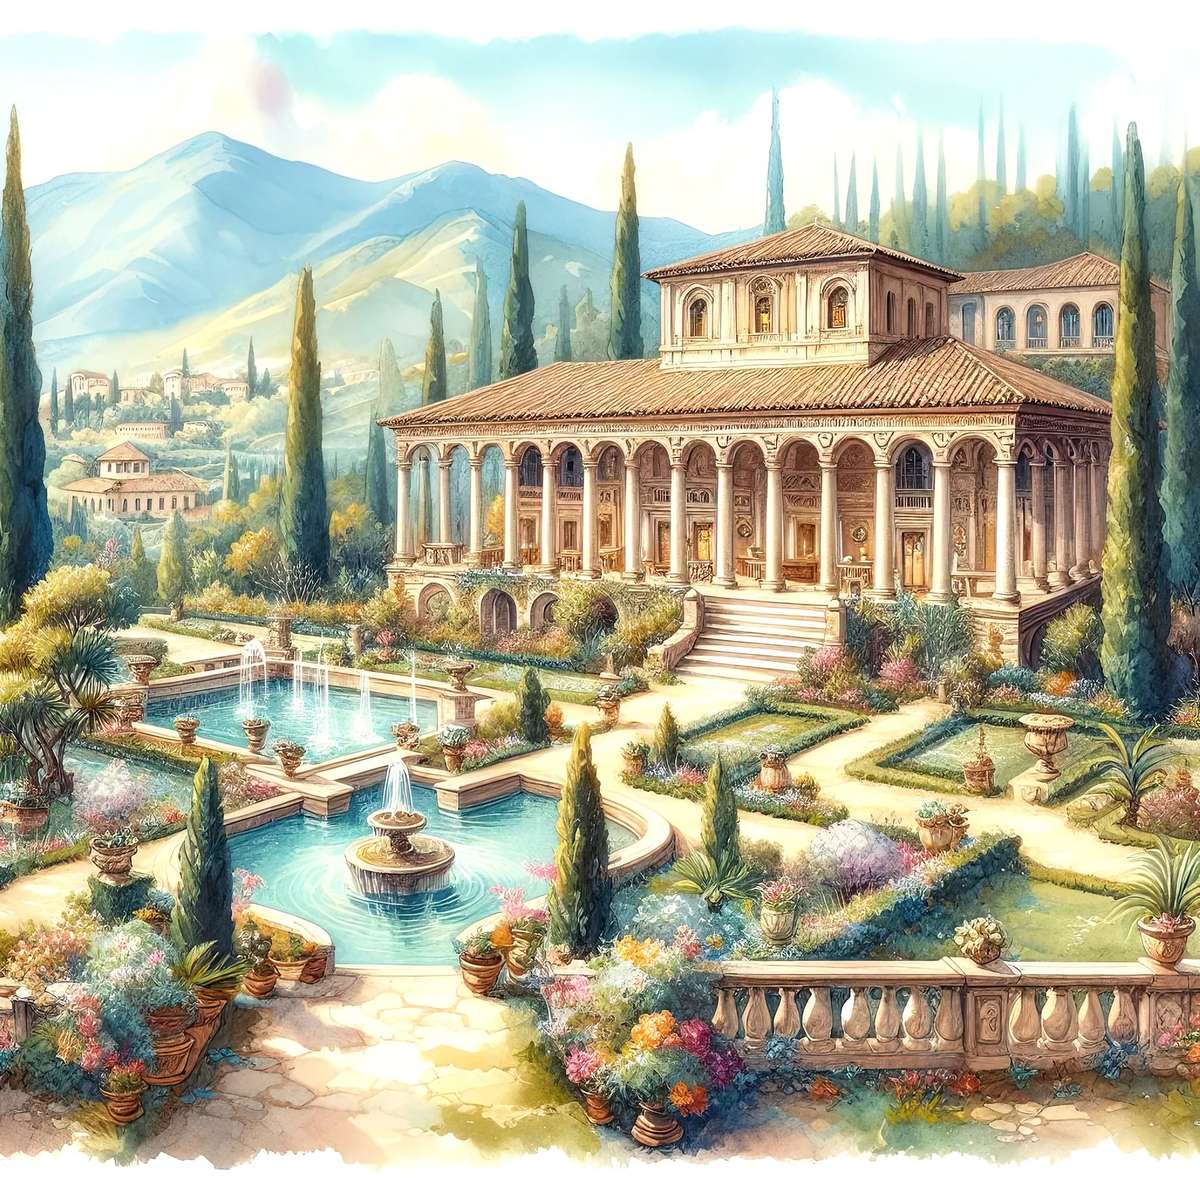 Villa Romana 3 puzzle online